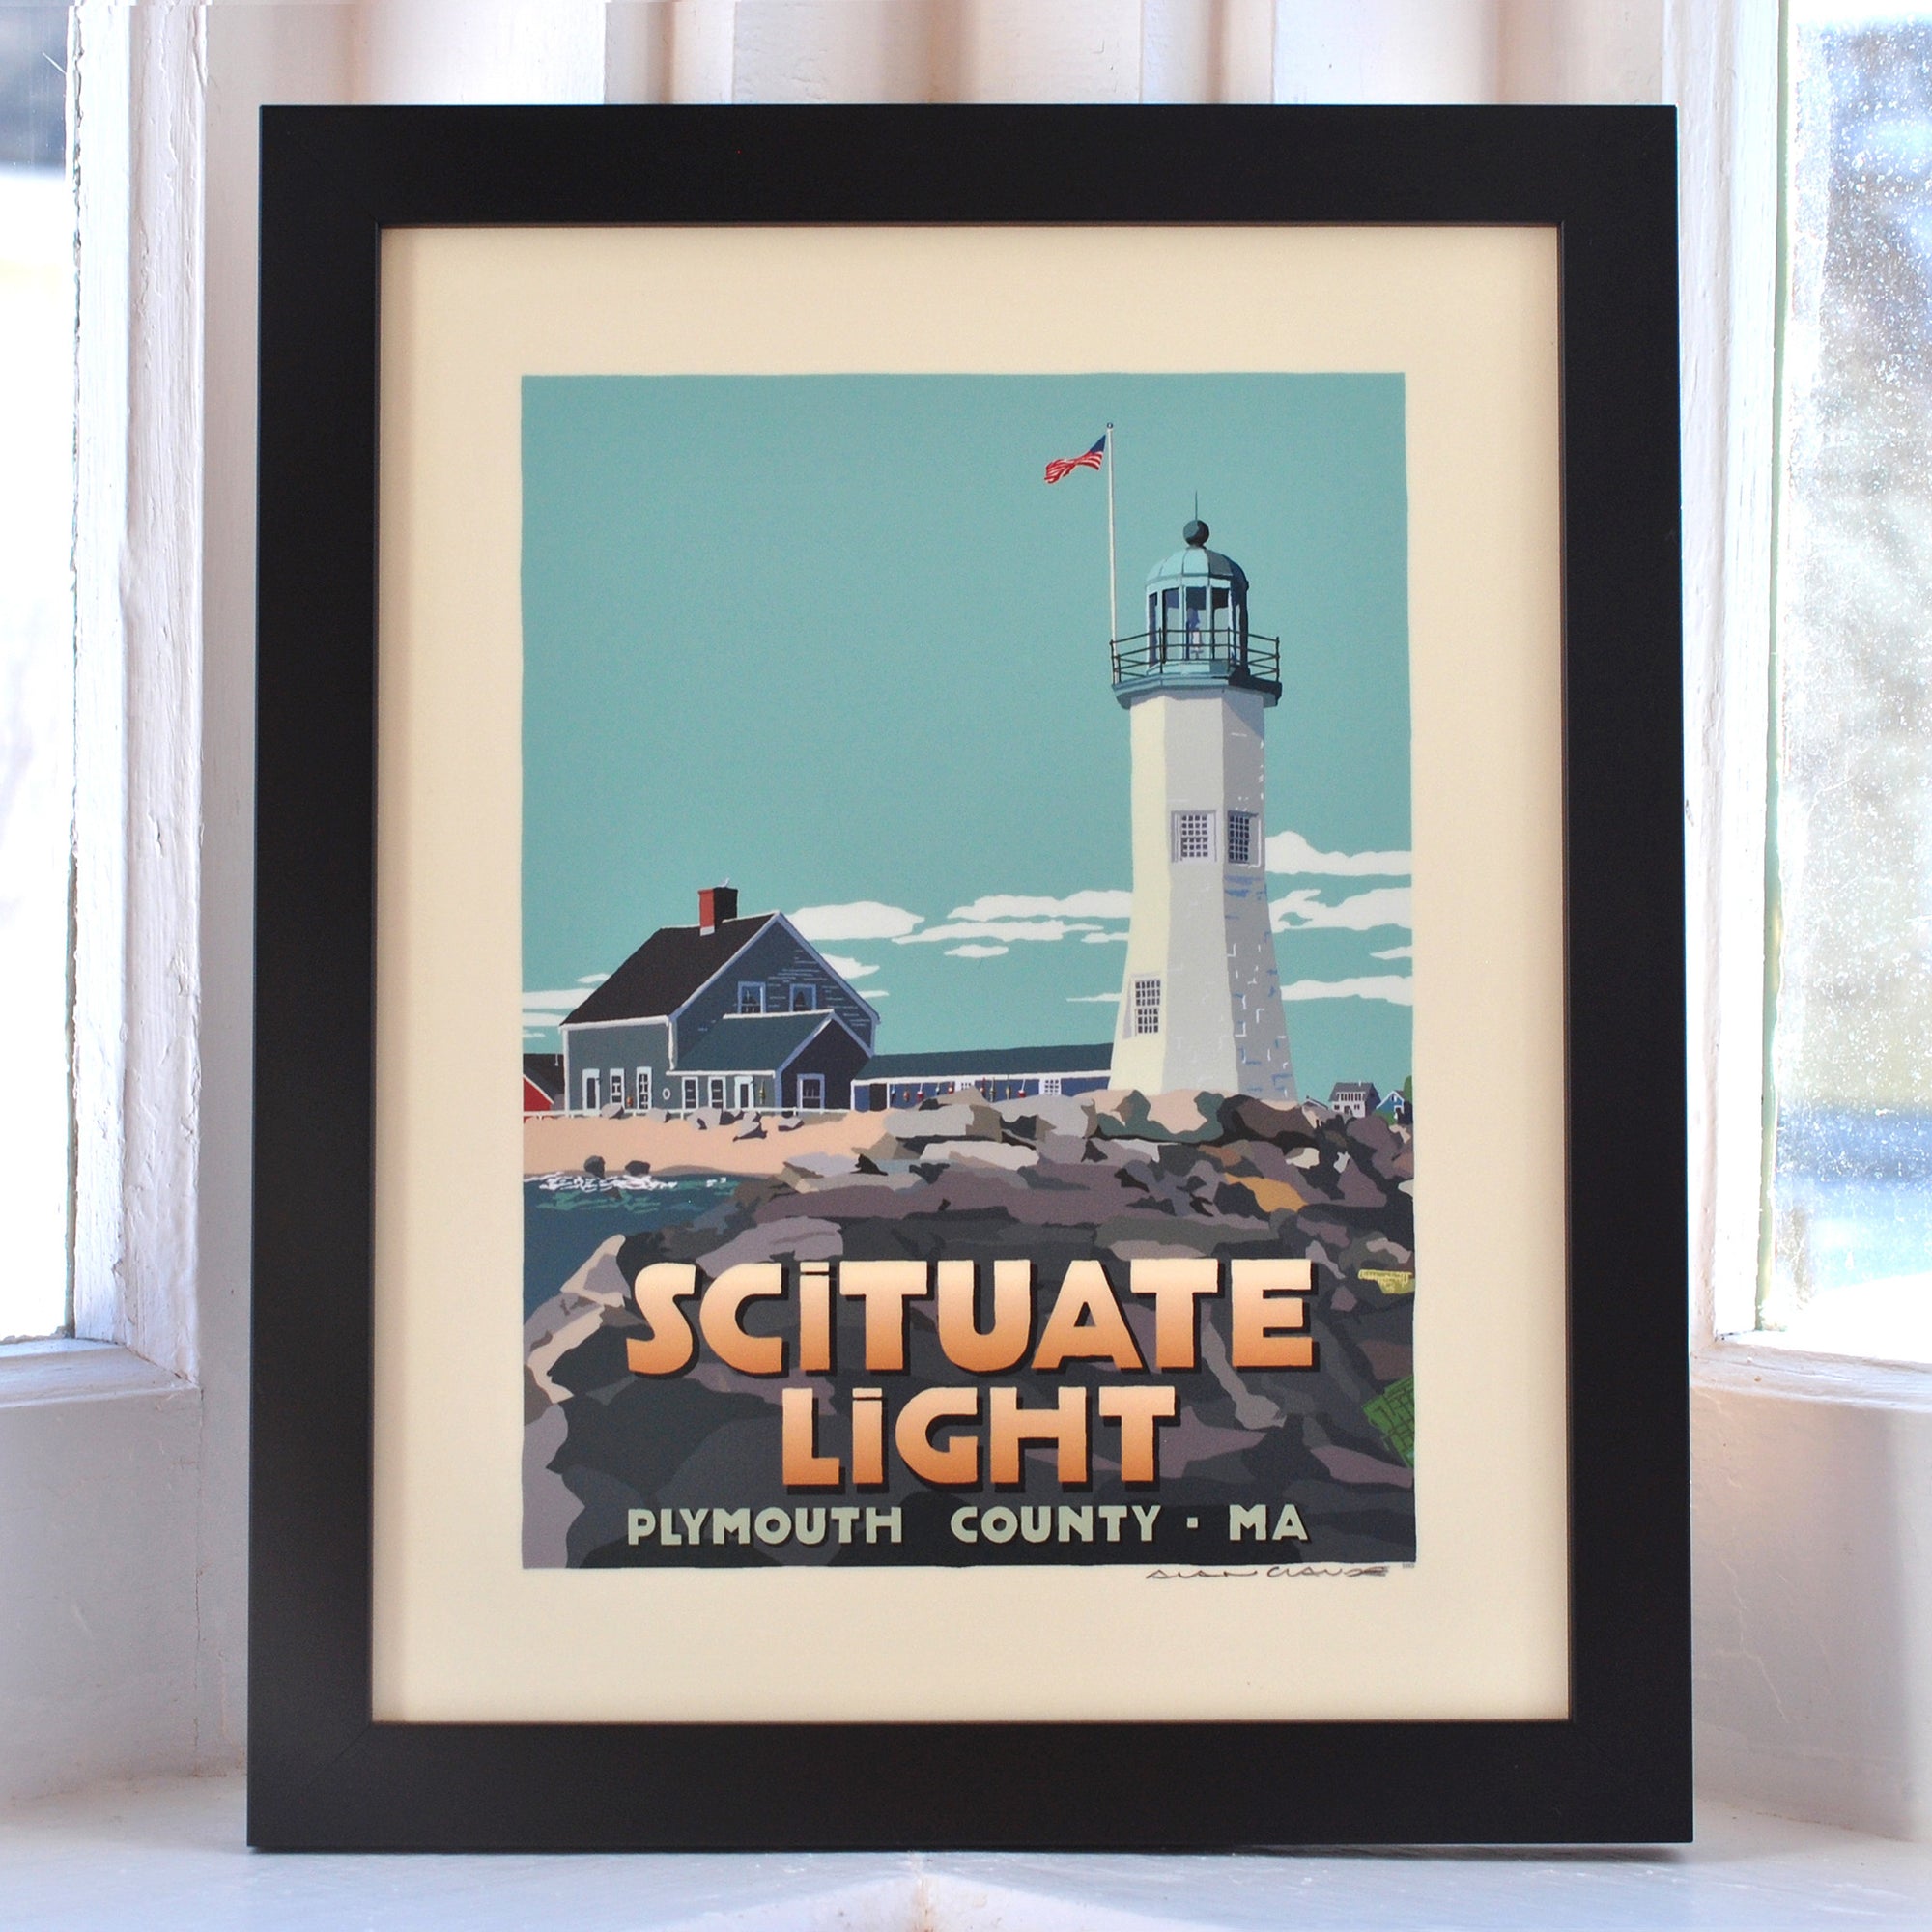 Scituate Light Art Print 8" x 10" Framed Travel Poster By Alan Claude - Massachusetts